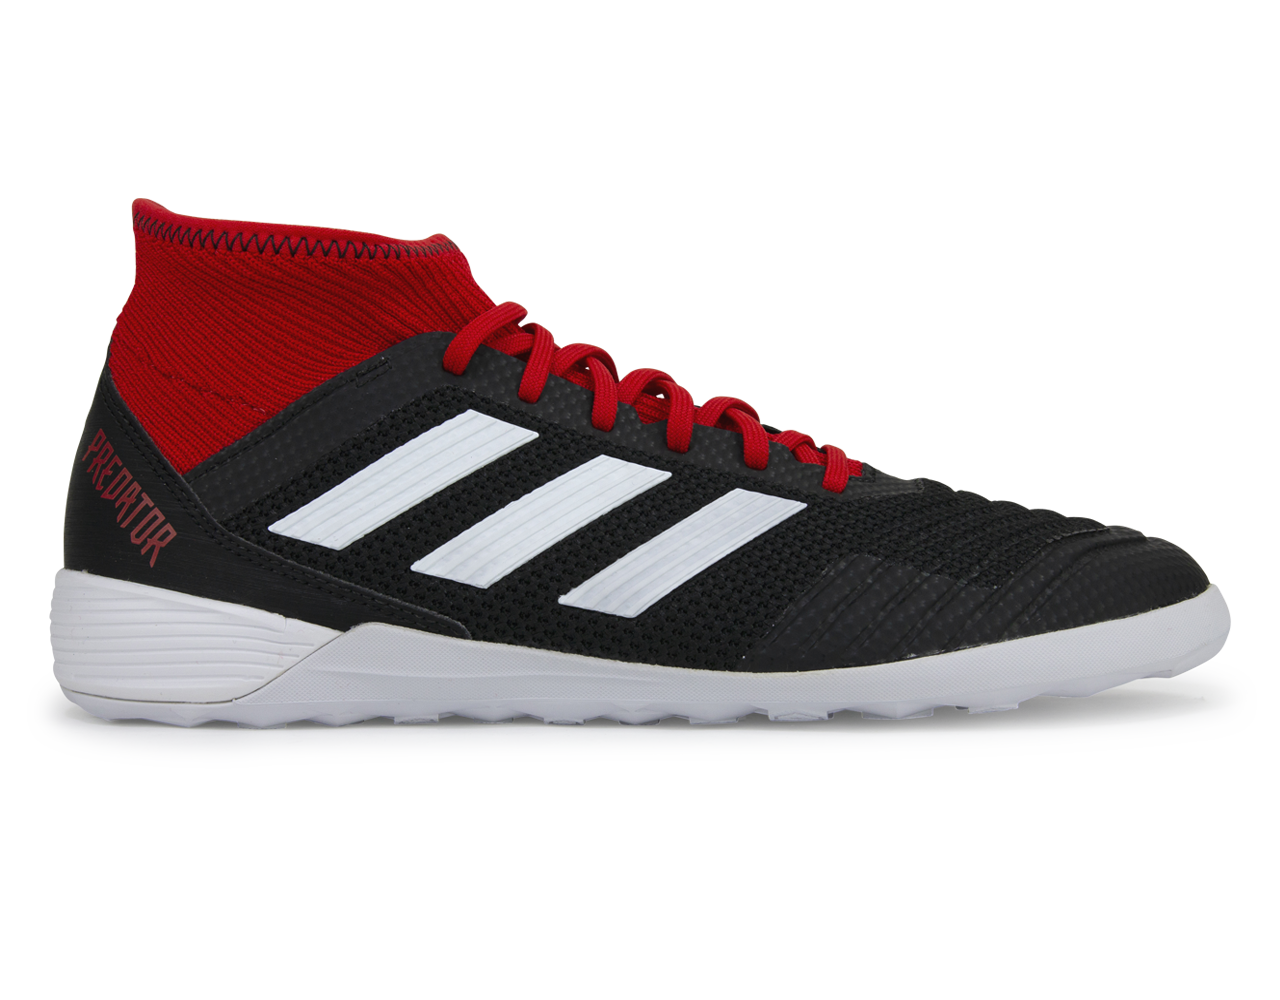 adidas Men's Predator Tango 18.3 Indoor Soccer Shoes Core Black/Red